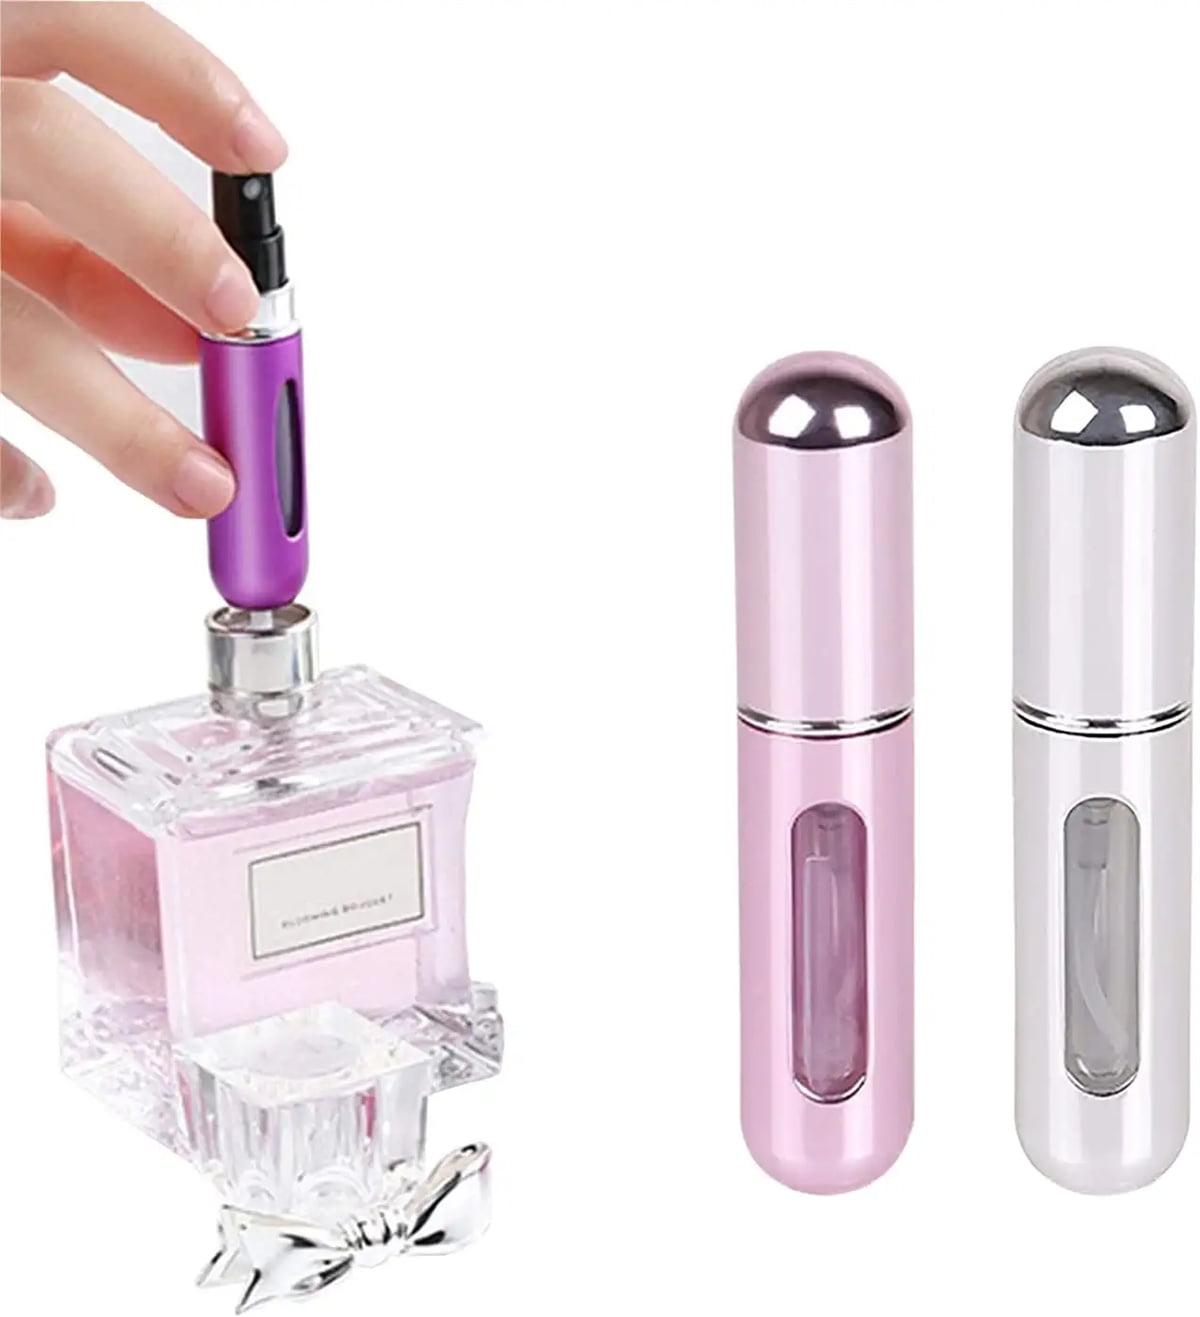 Perfume Atomiser Refillable Perfume Bottles Portable Pocket Spray Bottles  for Air Travel or Night Out Pack of 2, 5ml